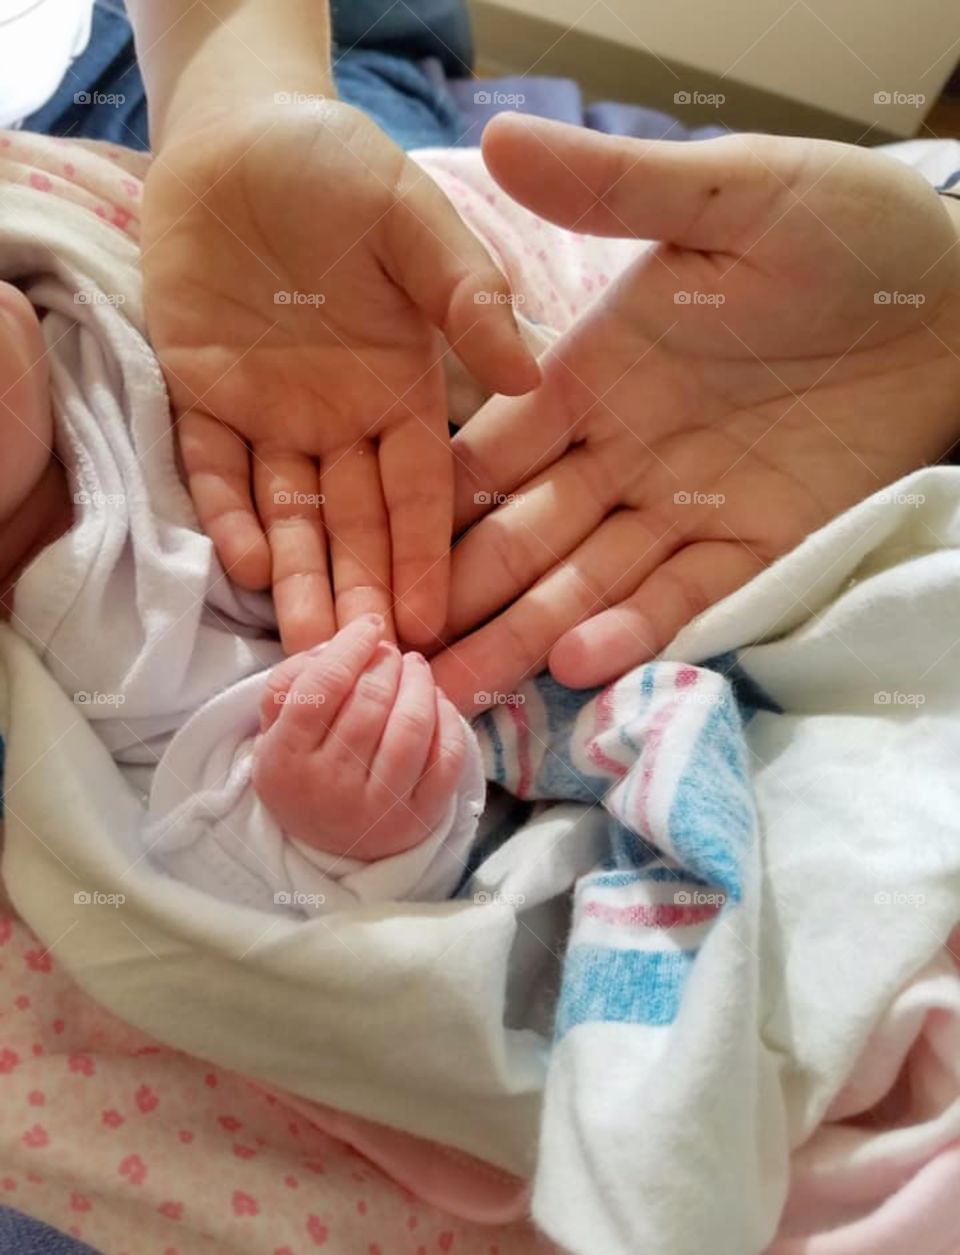 Welcoming newborn to the family 